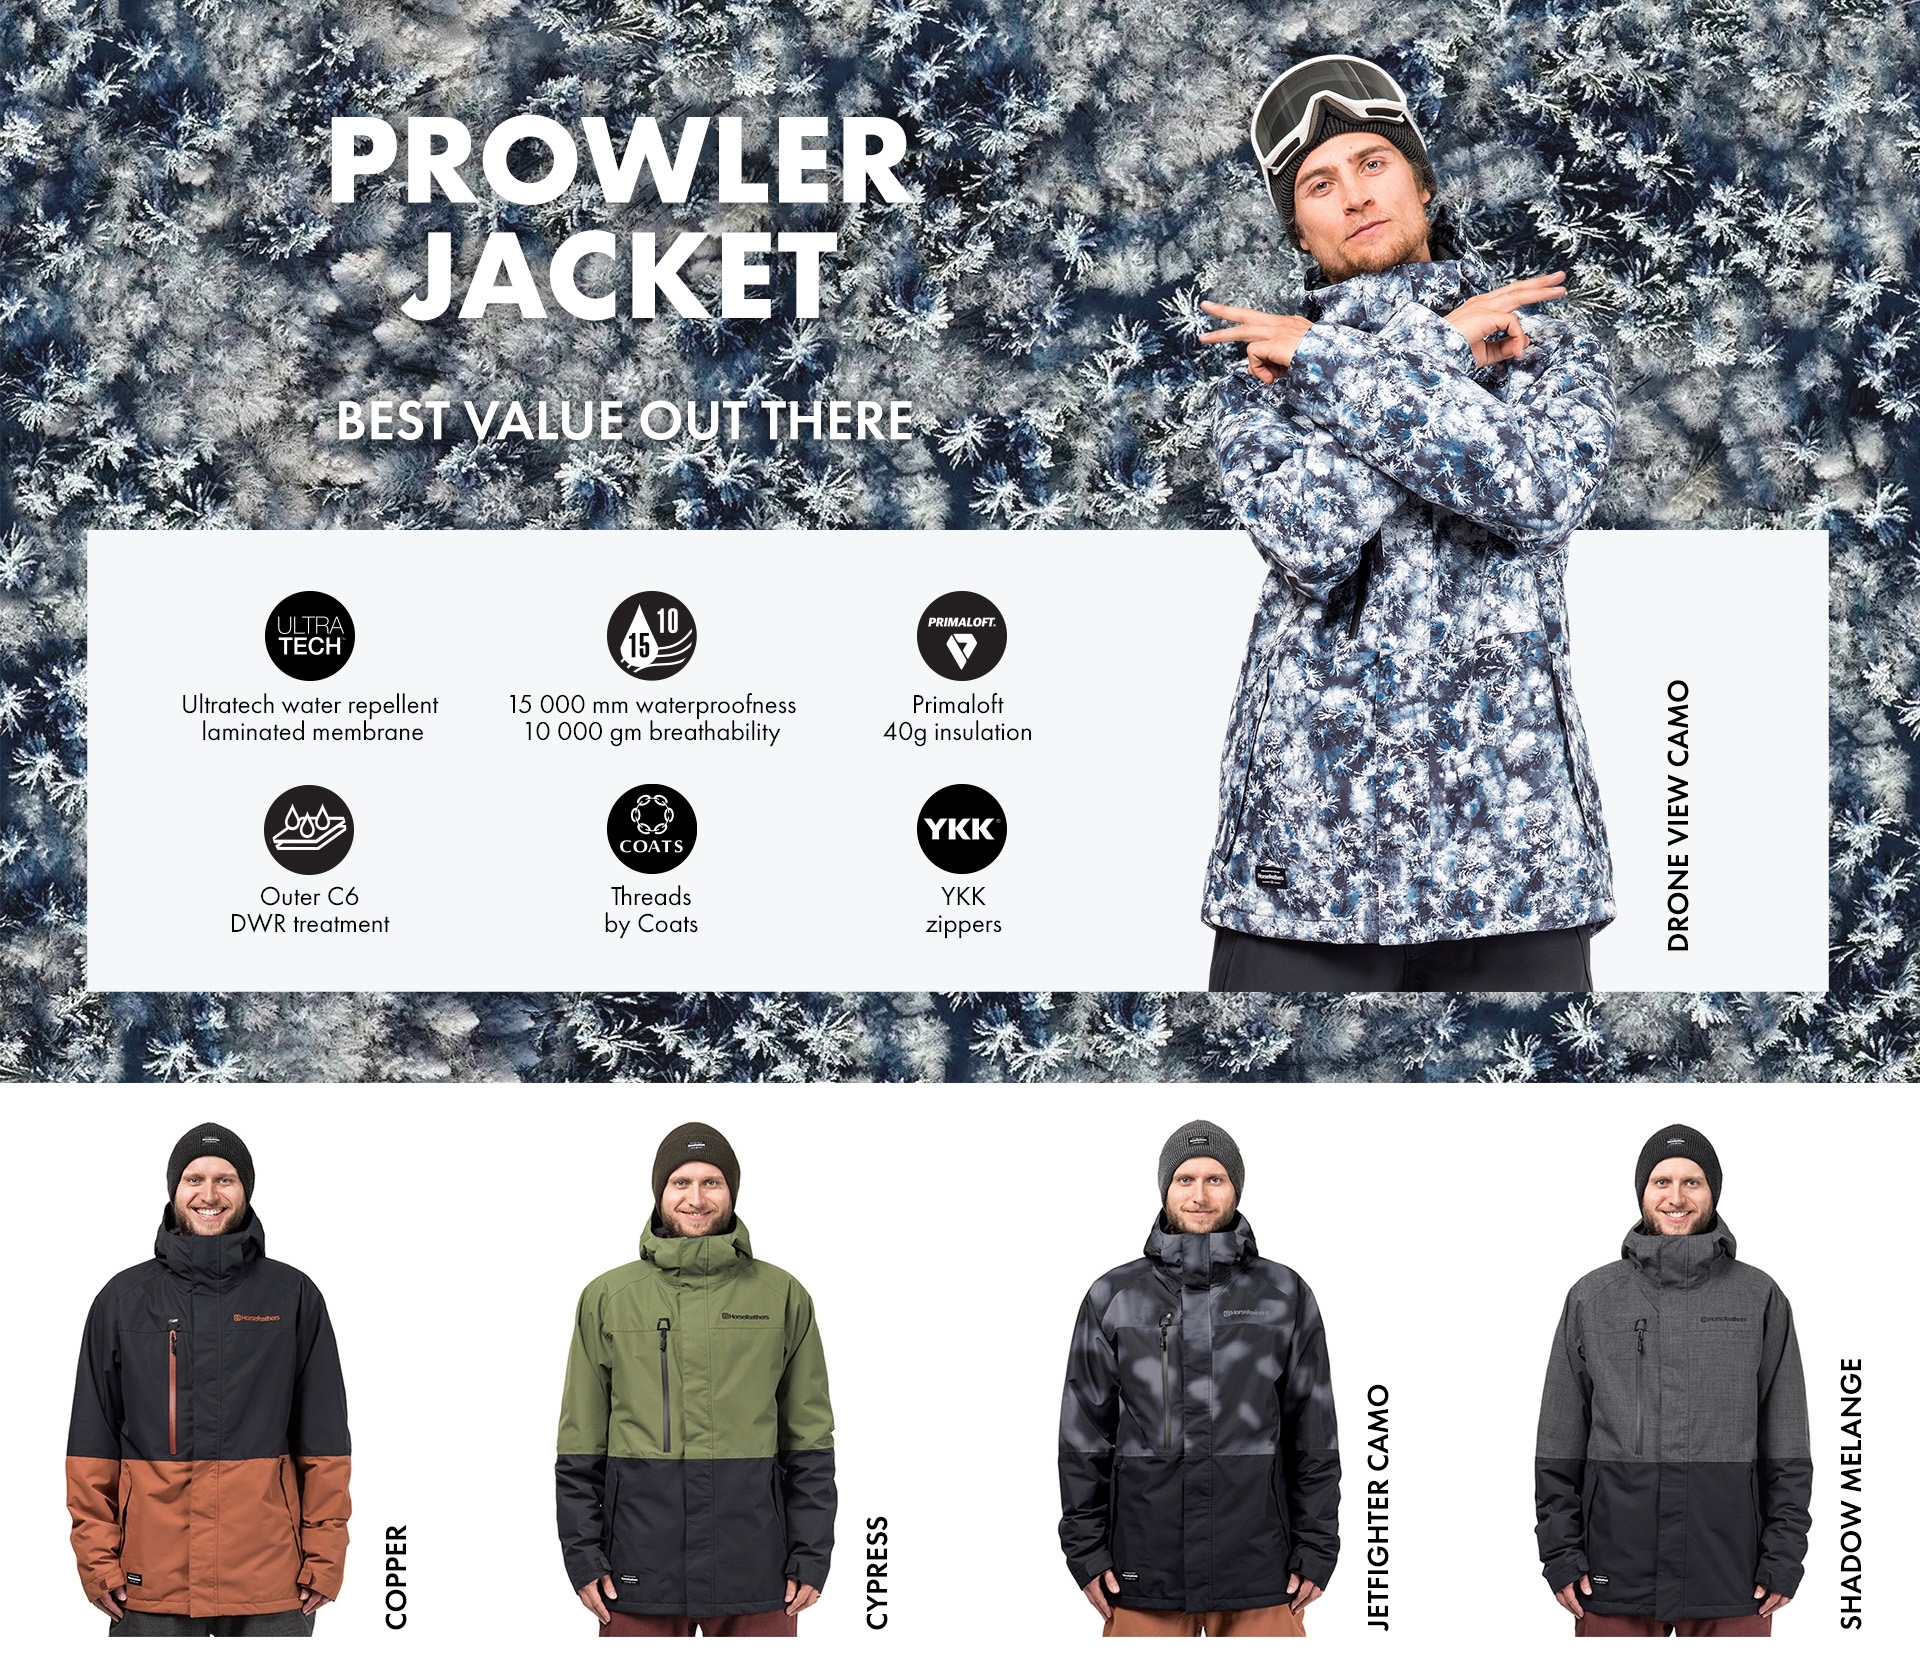 HF Prowler jacket.jpg